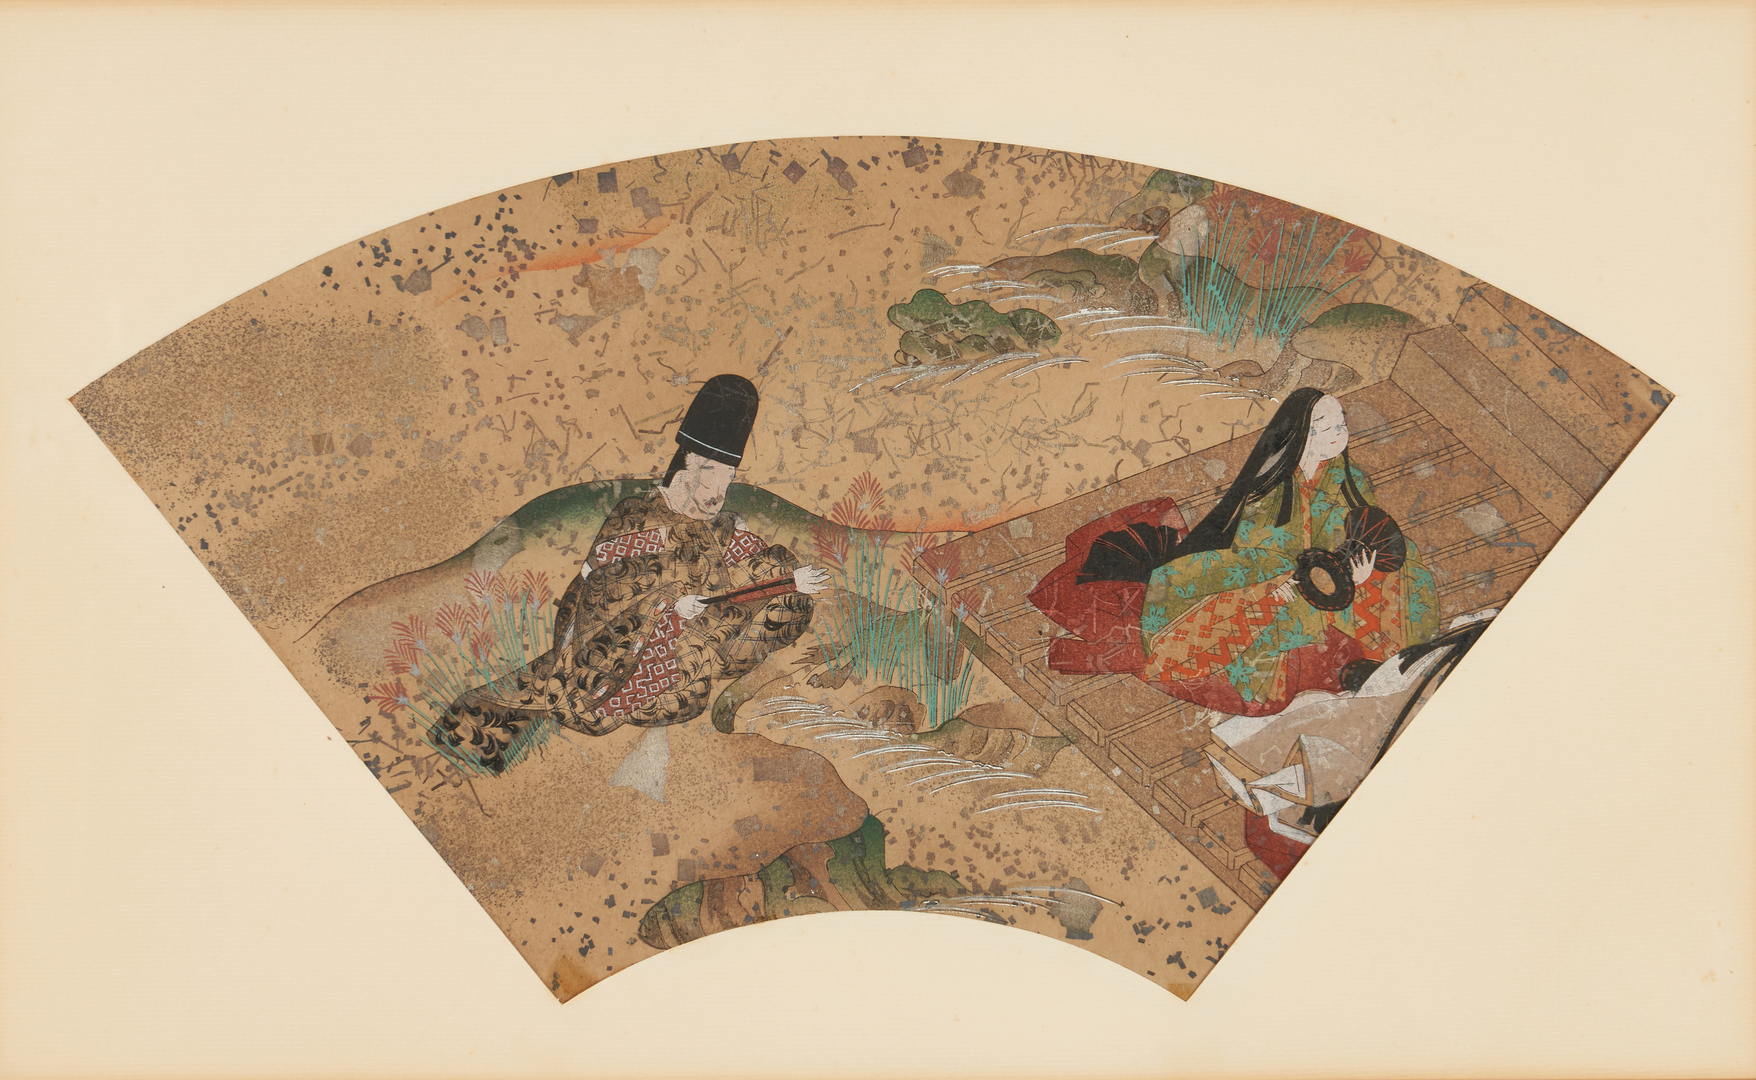 Lot 494: Japanese Porcelain & Fan Paintings, 6 Items